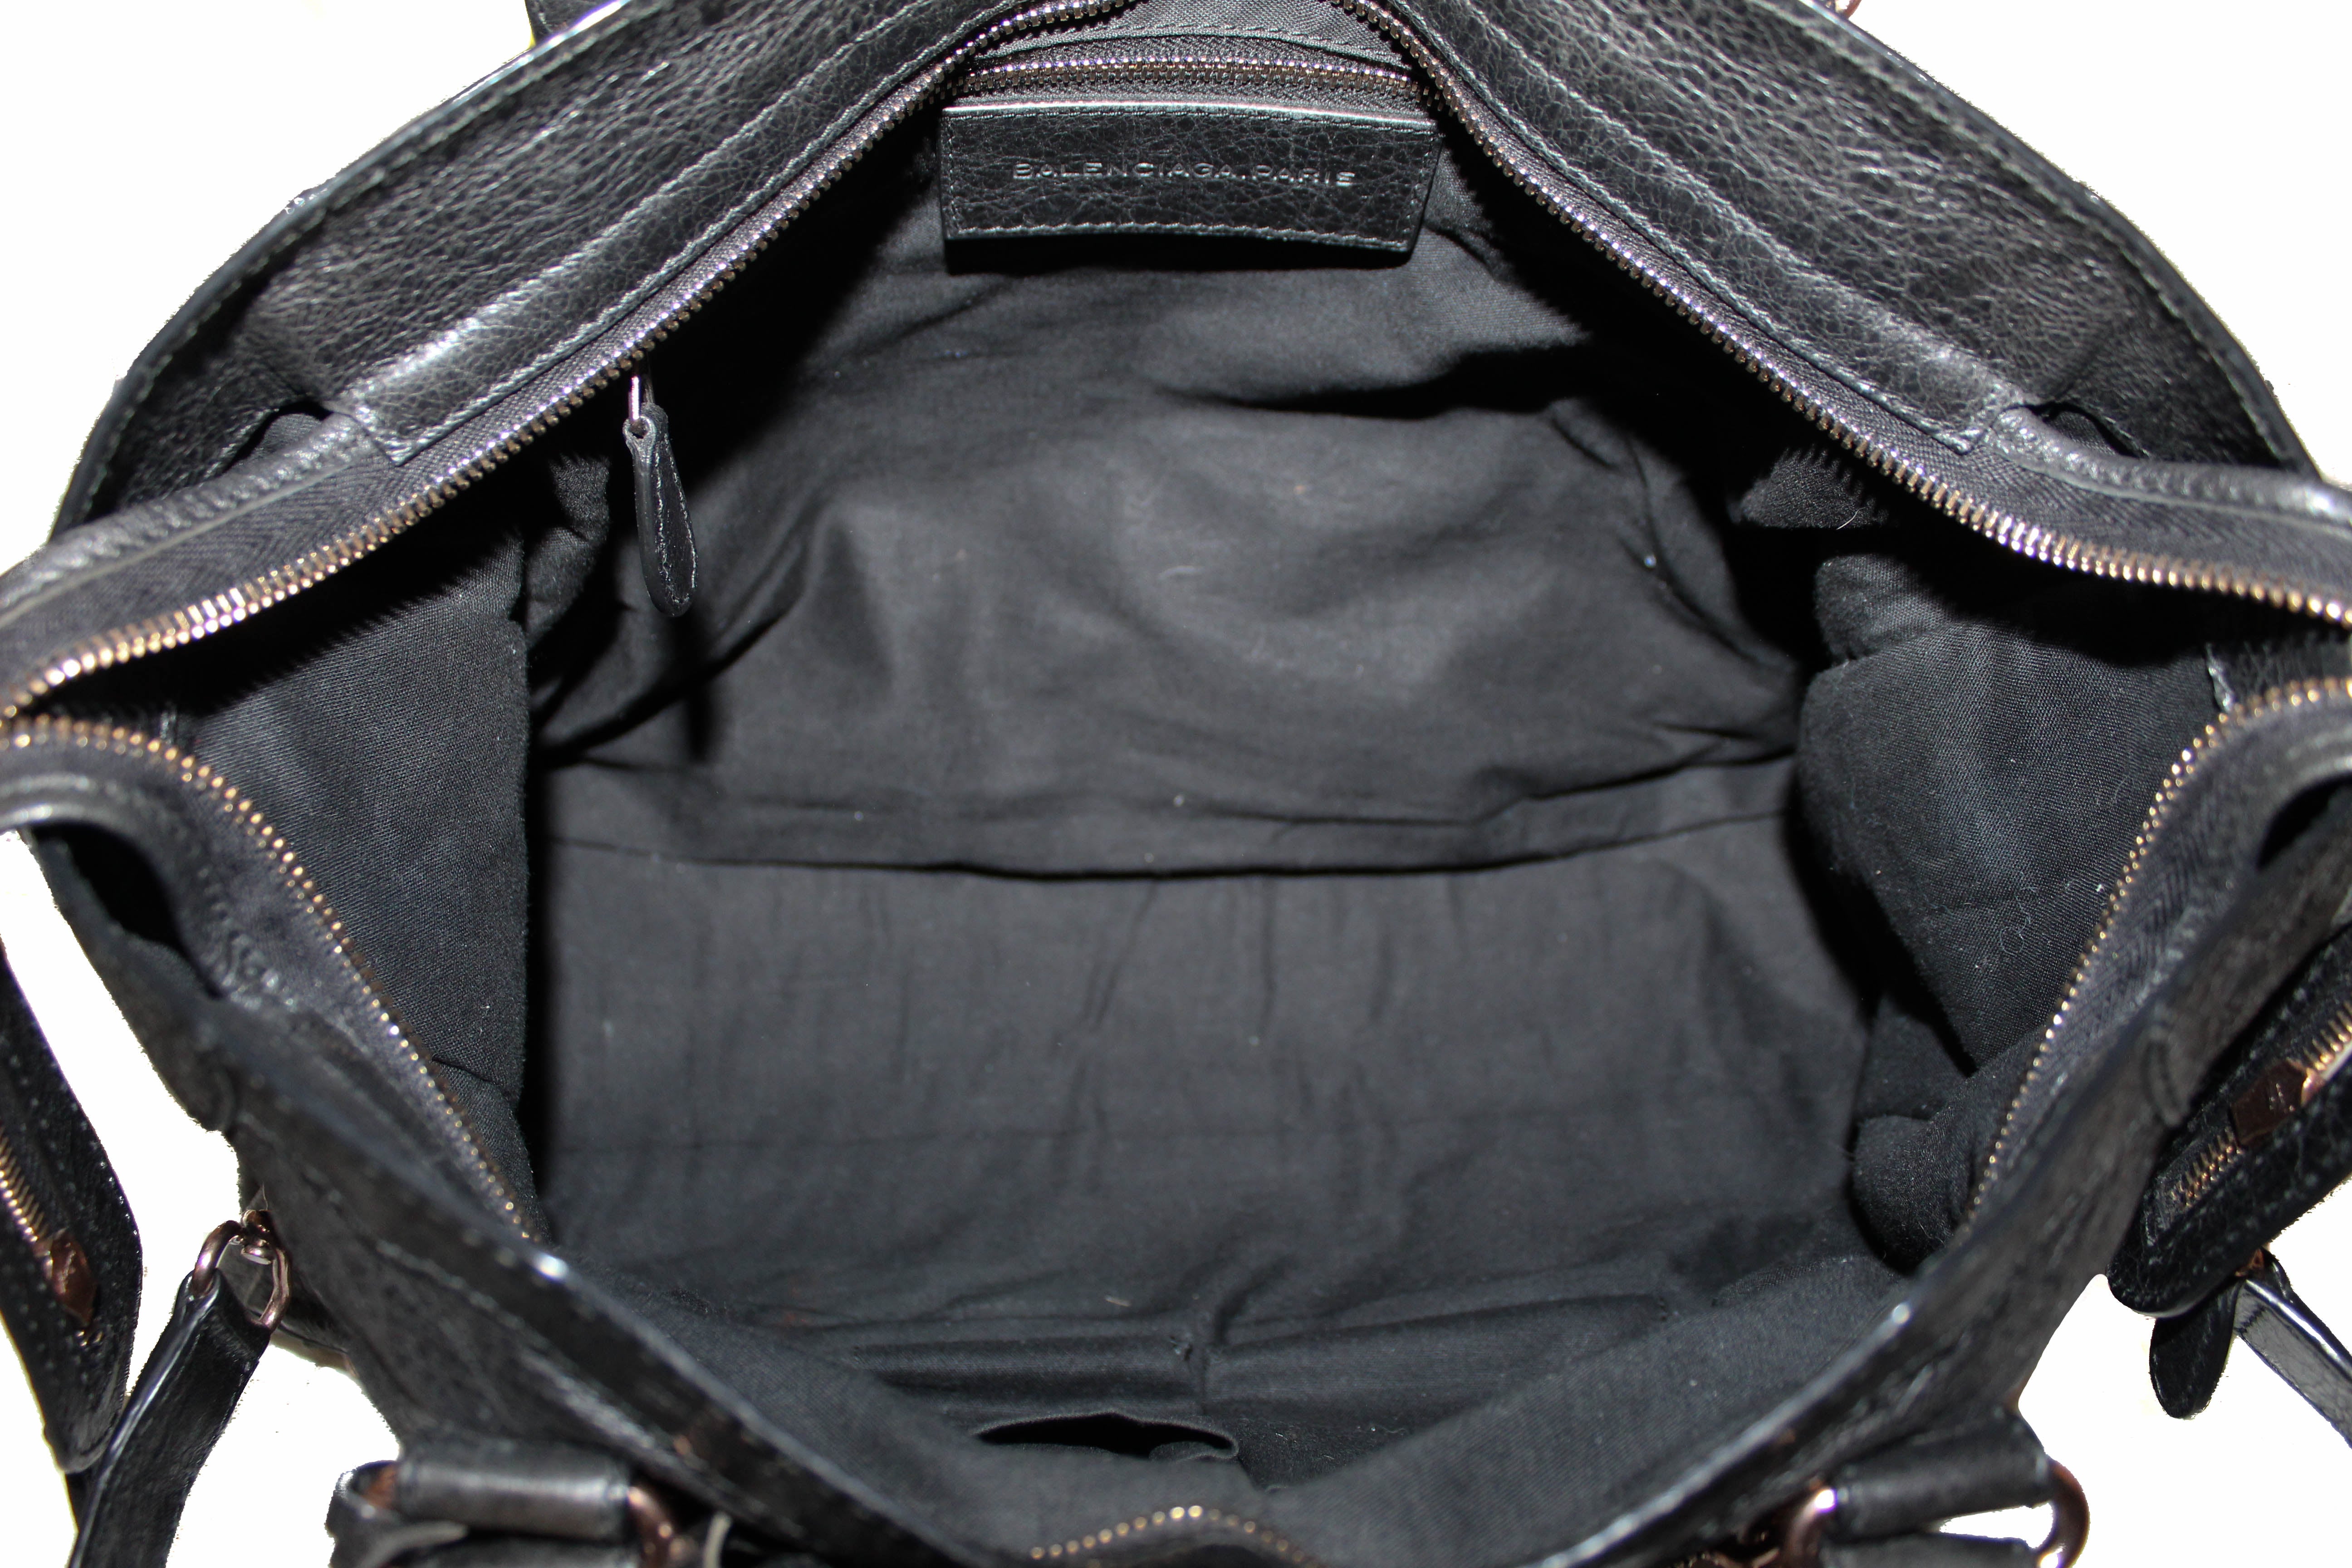 Authentic Balenciaga Black Giant 12 Rose Gold City Lambskin Leather Bag